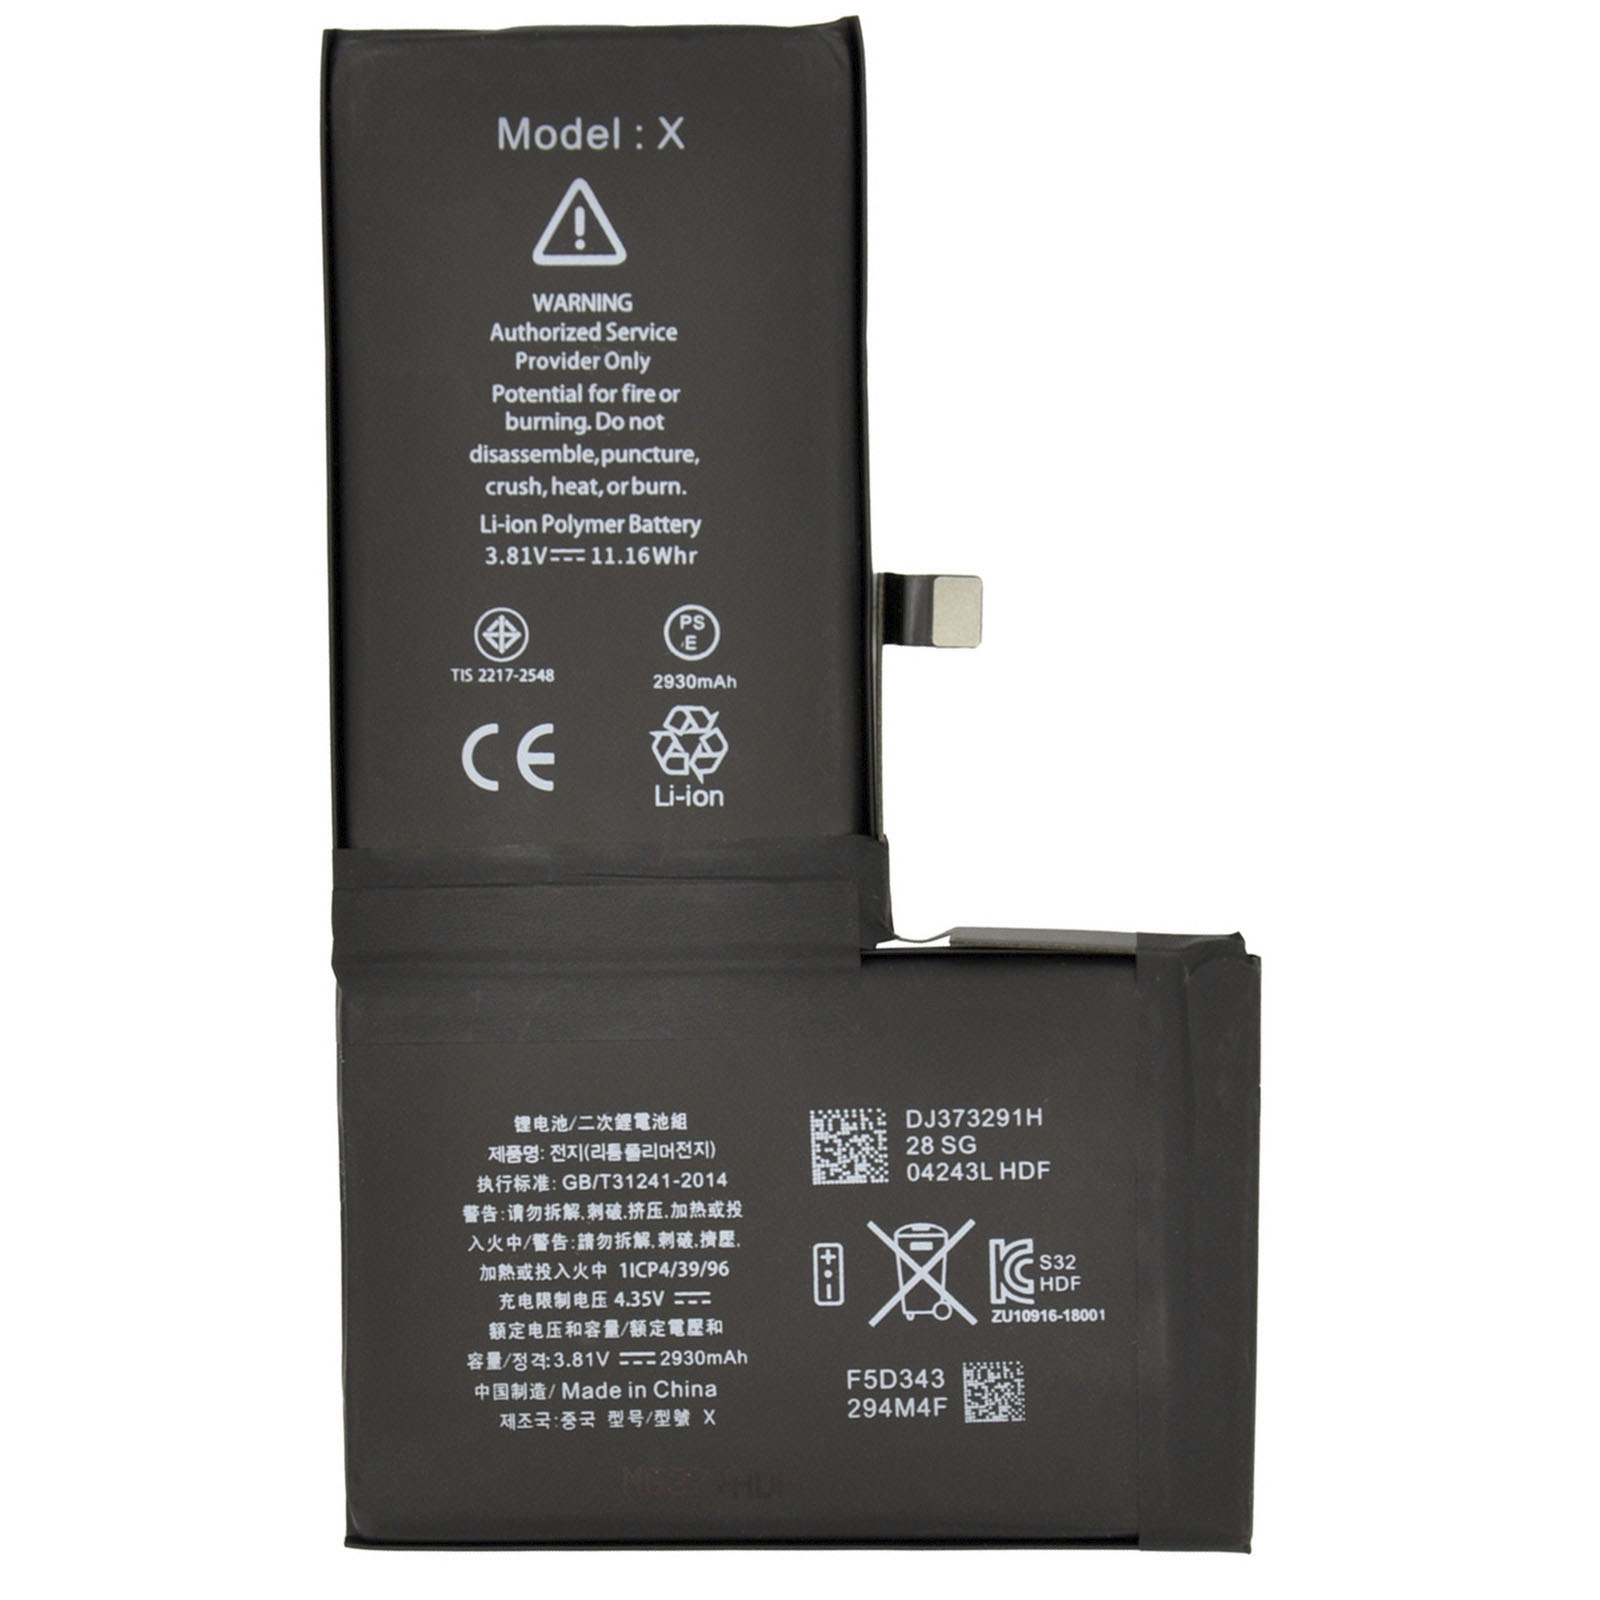 АКБ (Аккумулятор) для APPLE iPhone X, 2930mAh, 3.81V, цвет черный